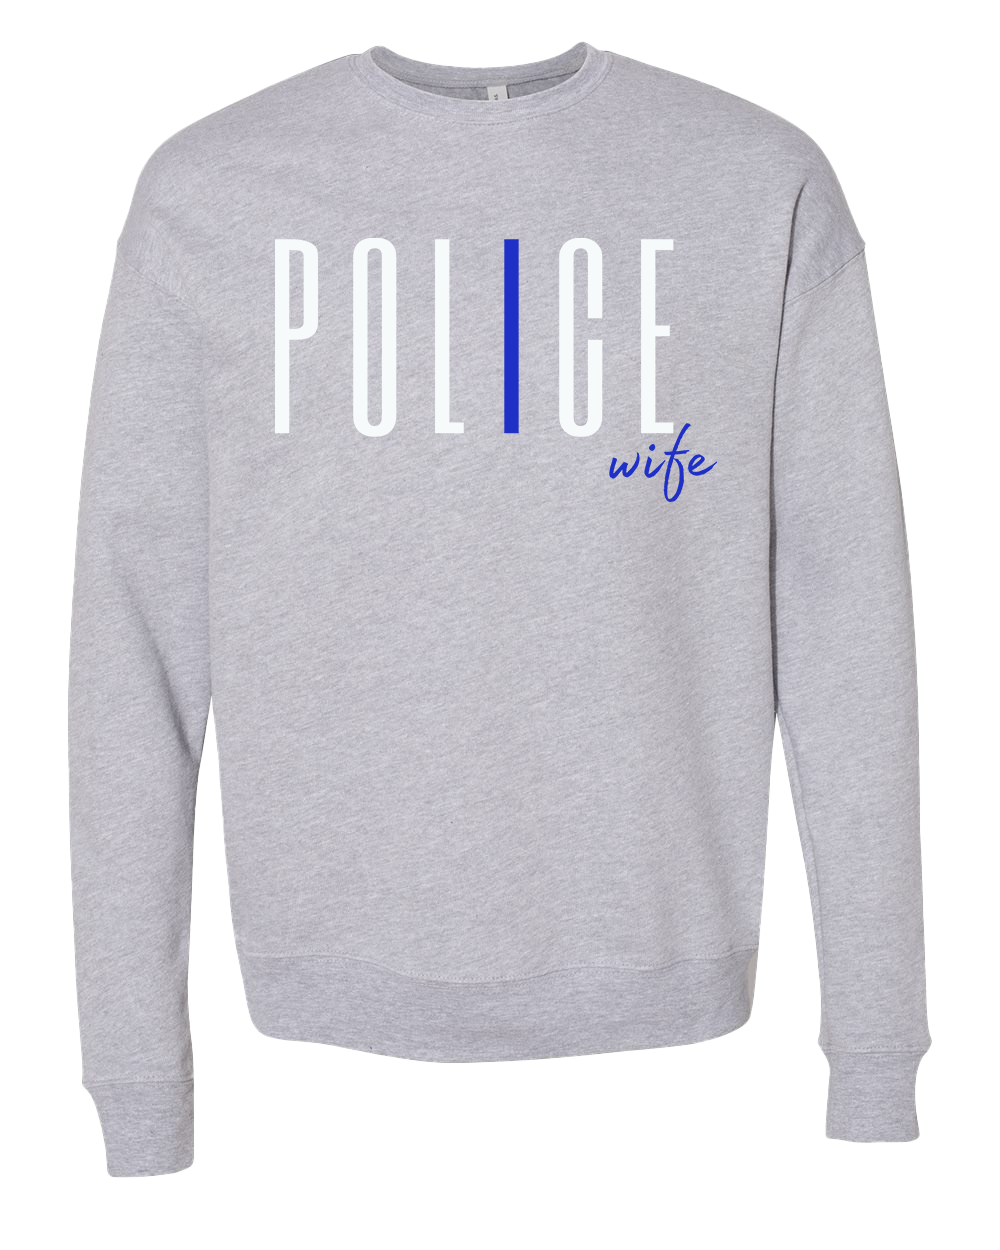 Police Wife Crew Sweatshirt - Athletic Grey